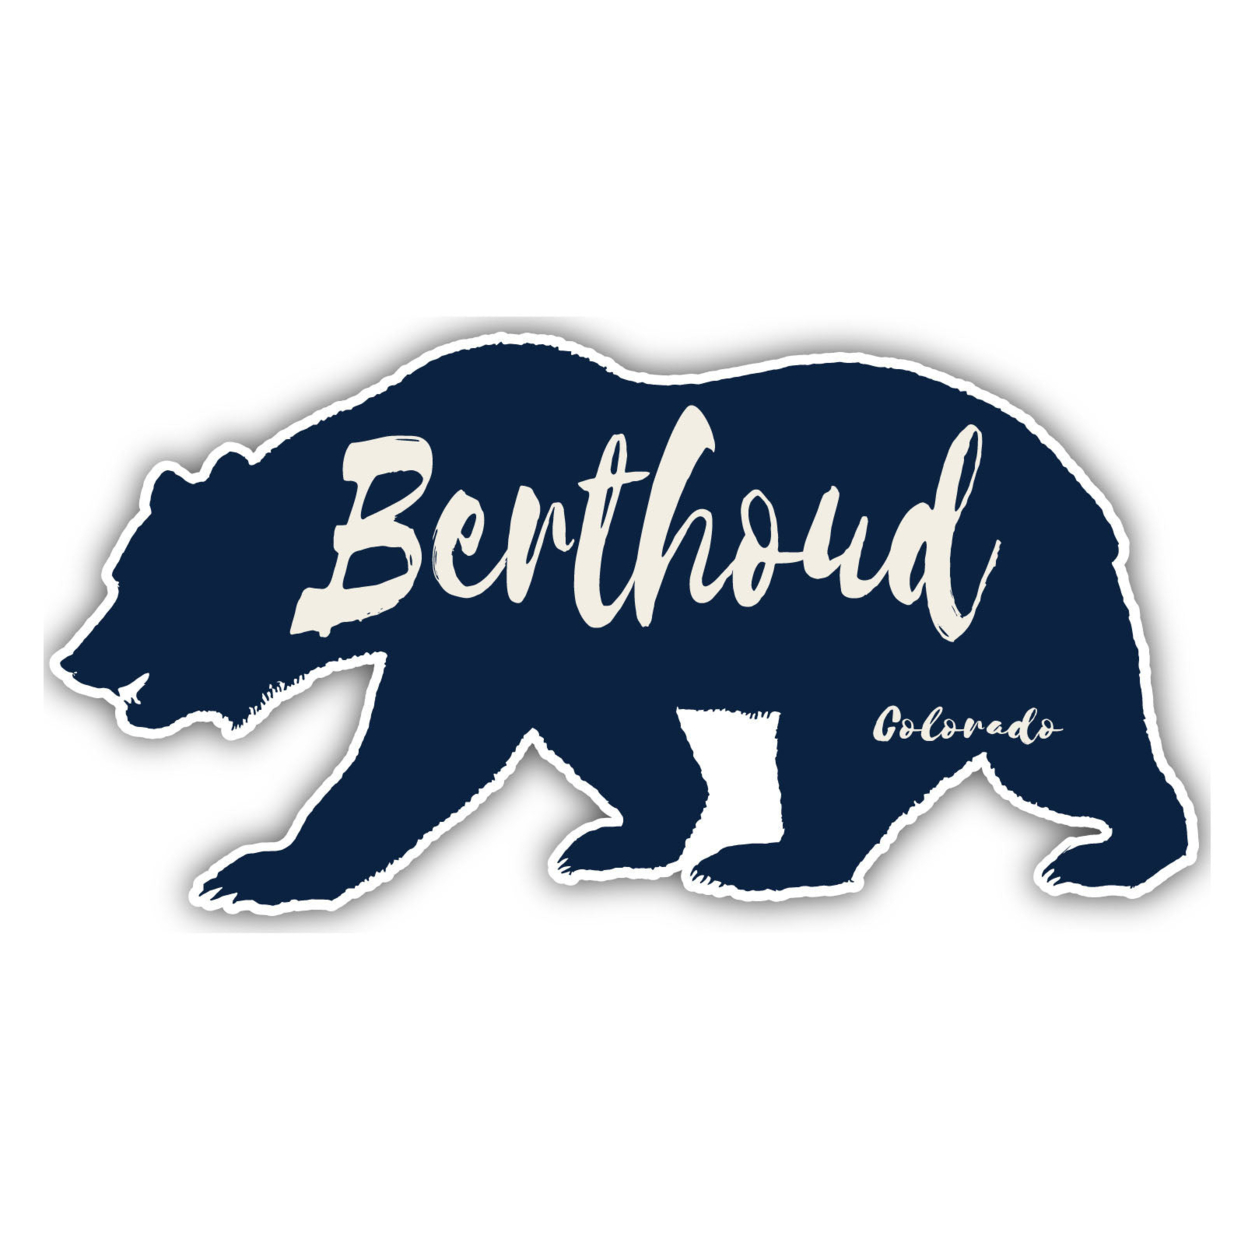 Berthoud Colorado Souvenir Decorative Stickers (Choose Theme And Size) - Single Unit, 6-Inch, Tent